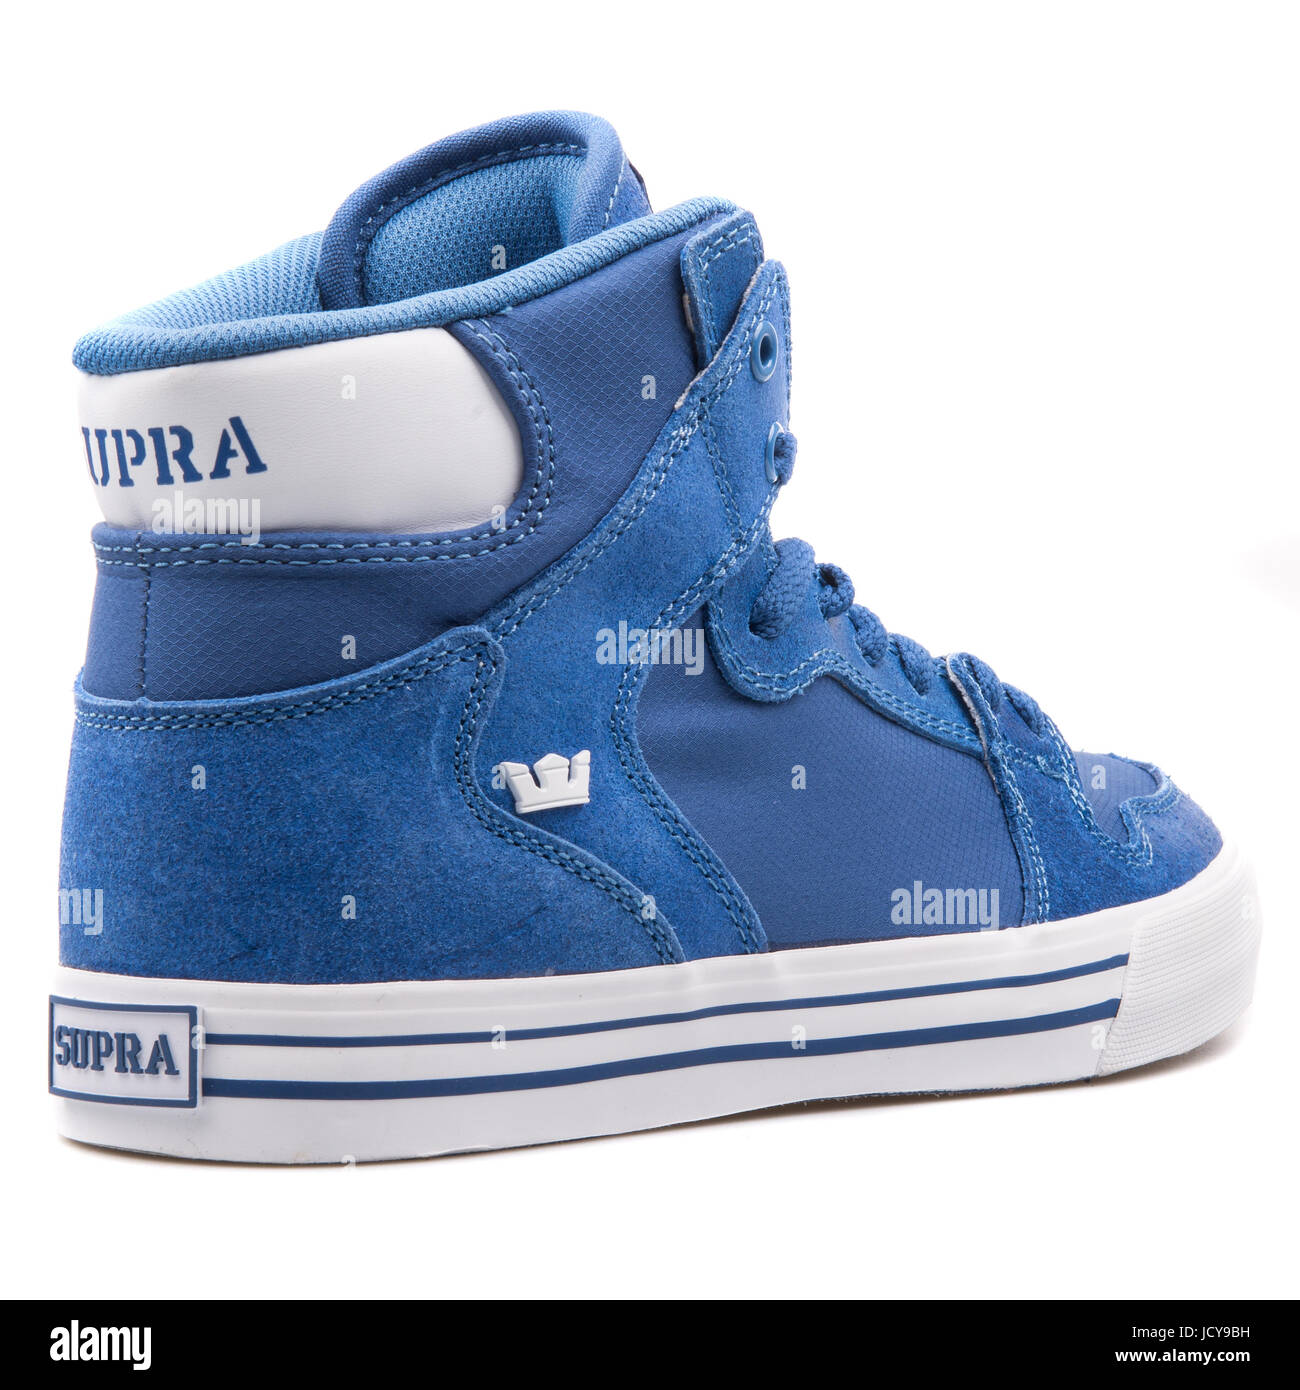 supra footwear royal blue